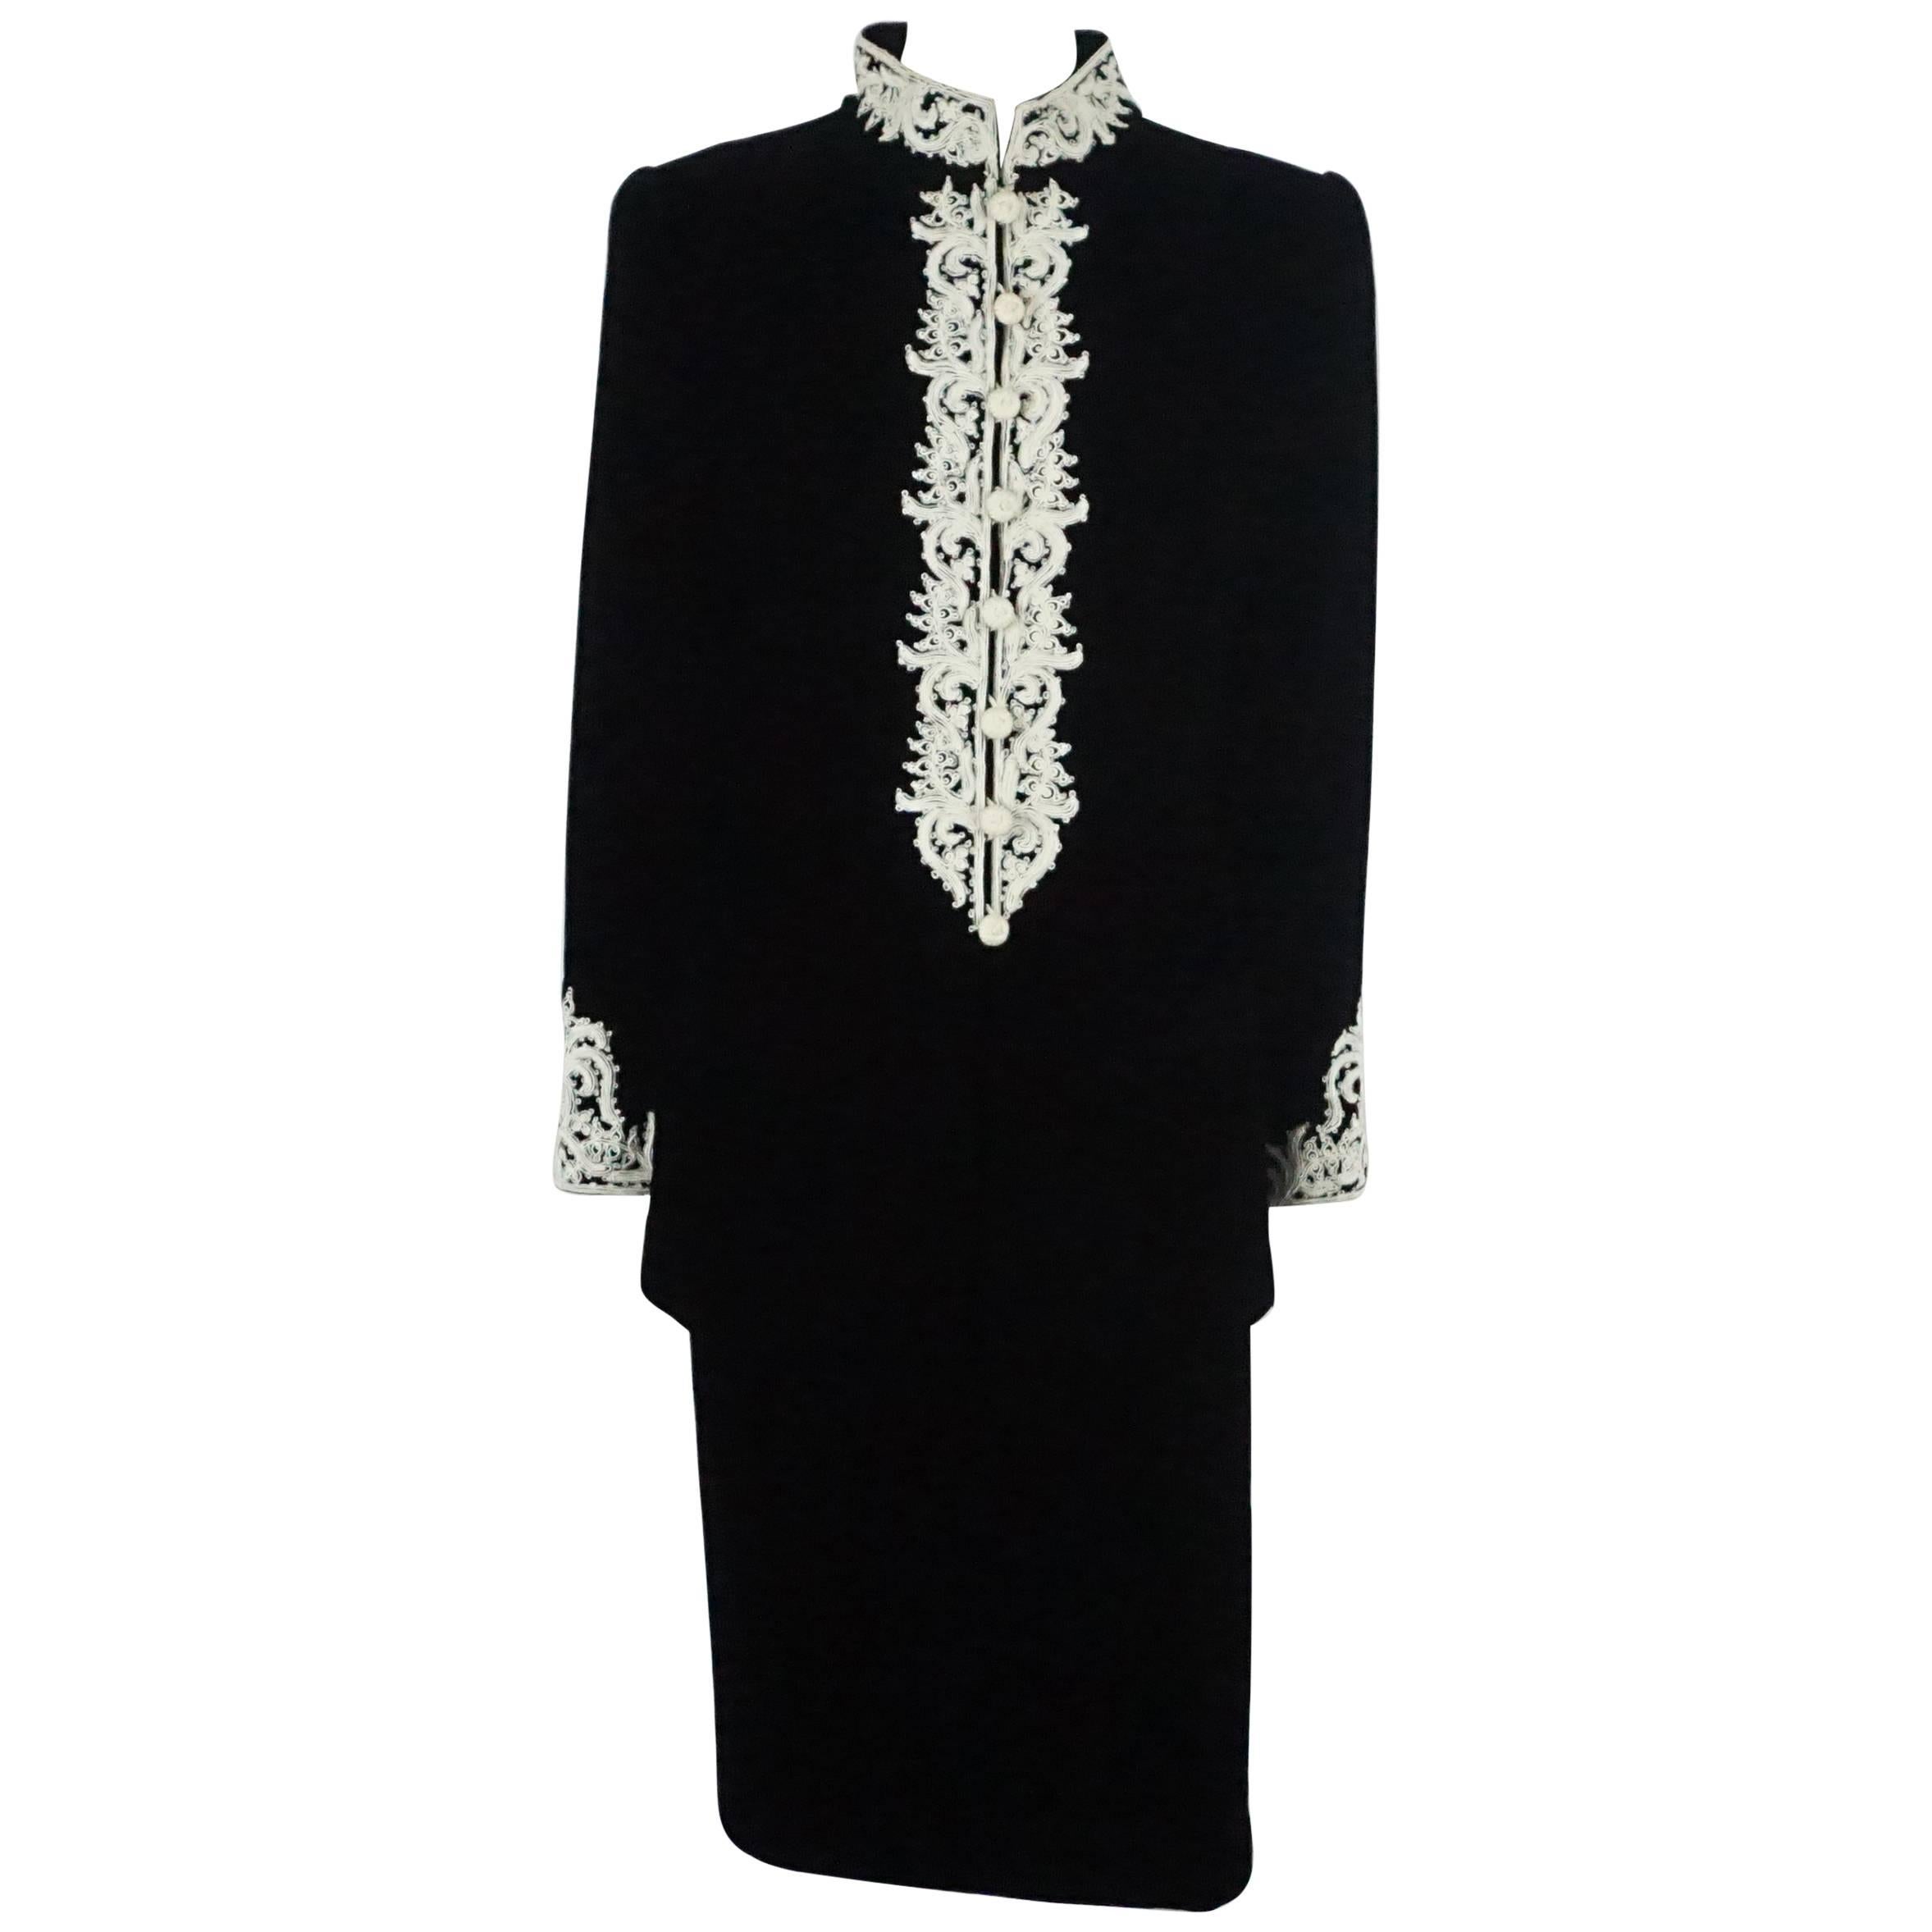 Oscar de la Renta Black Velvet Skirt Suit with White Embroidery - 10 - 1990s